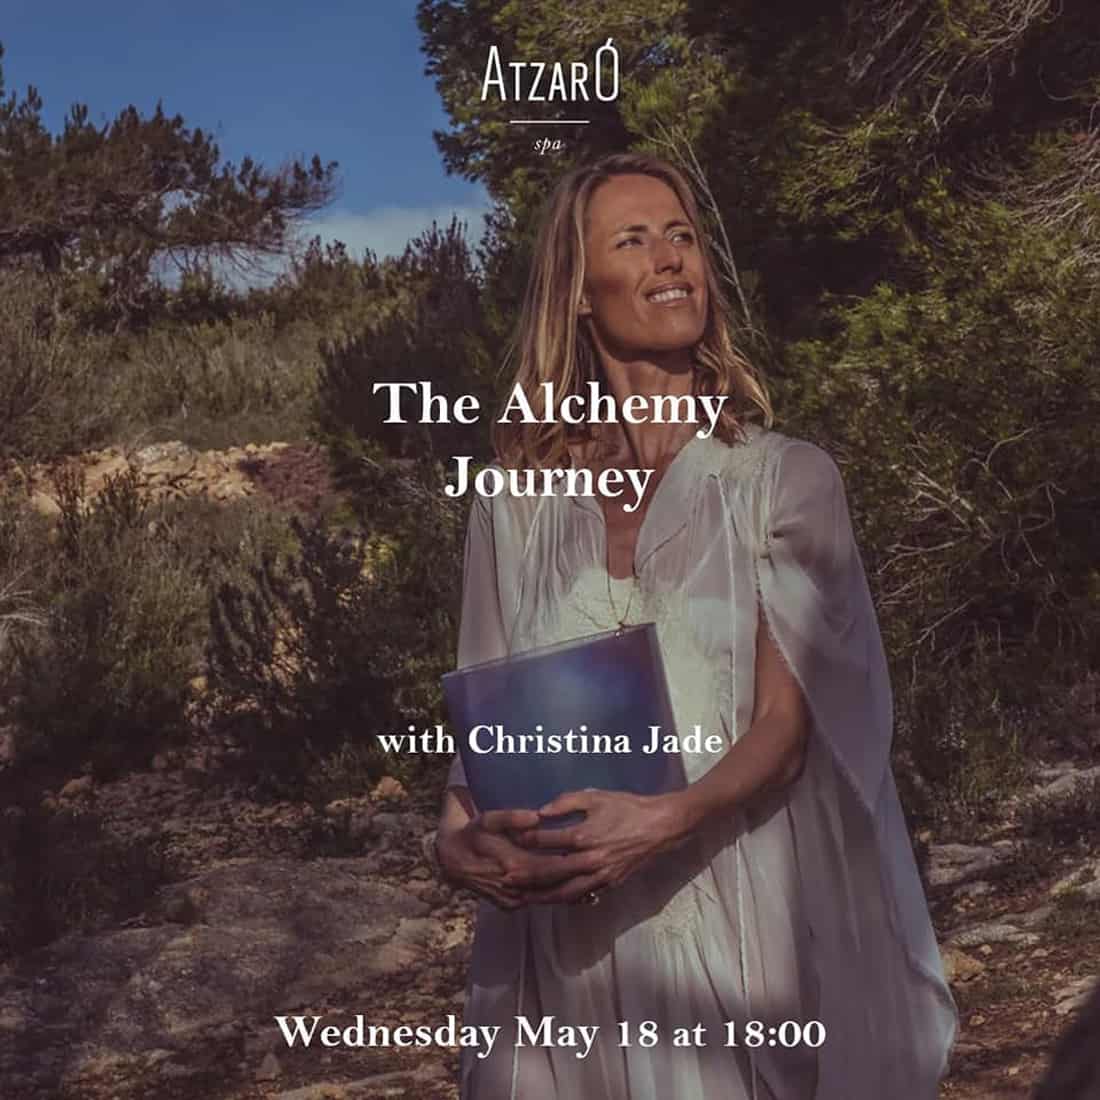 the-alchemy-journey-atzaro-ibiza-2022-welcometoibiza